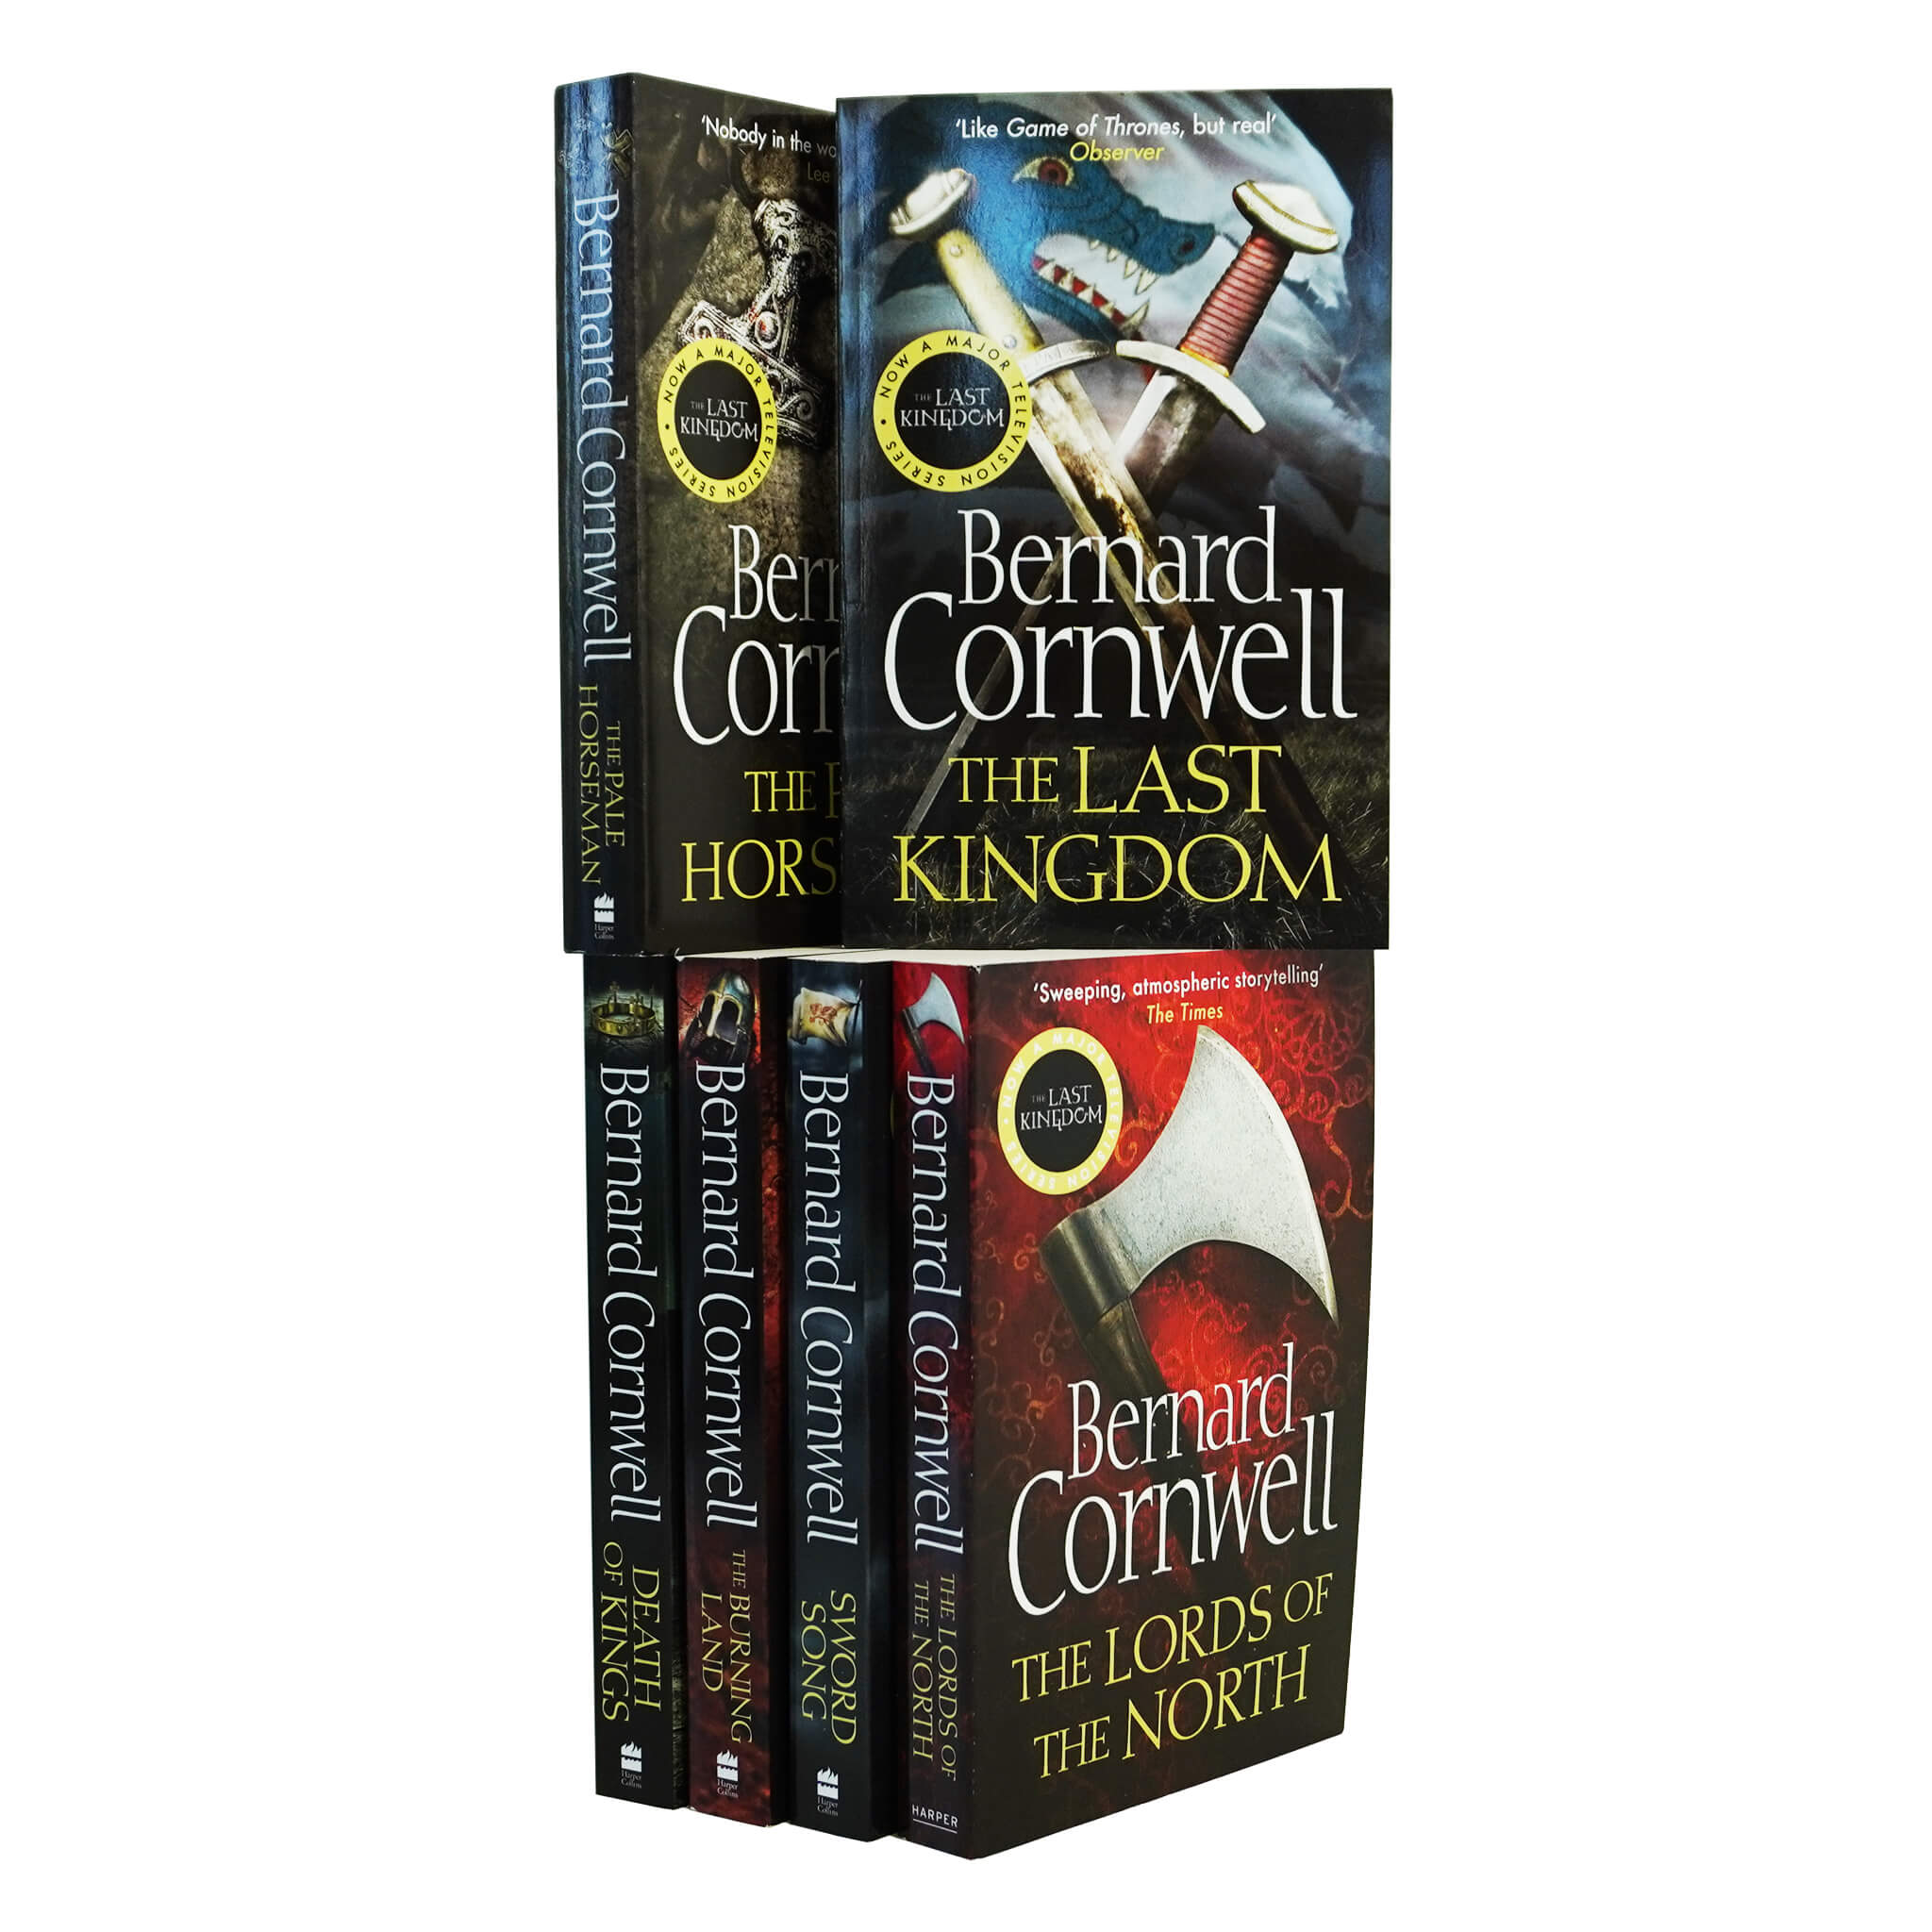  The Last Kingdom eBook : Cornwell, Bernard: Kindle Store